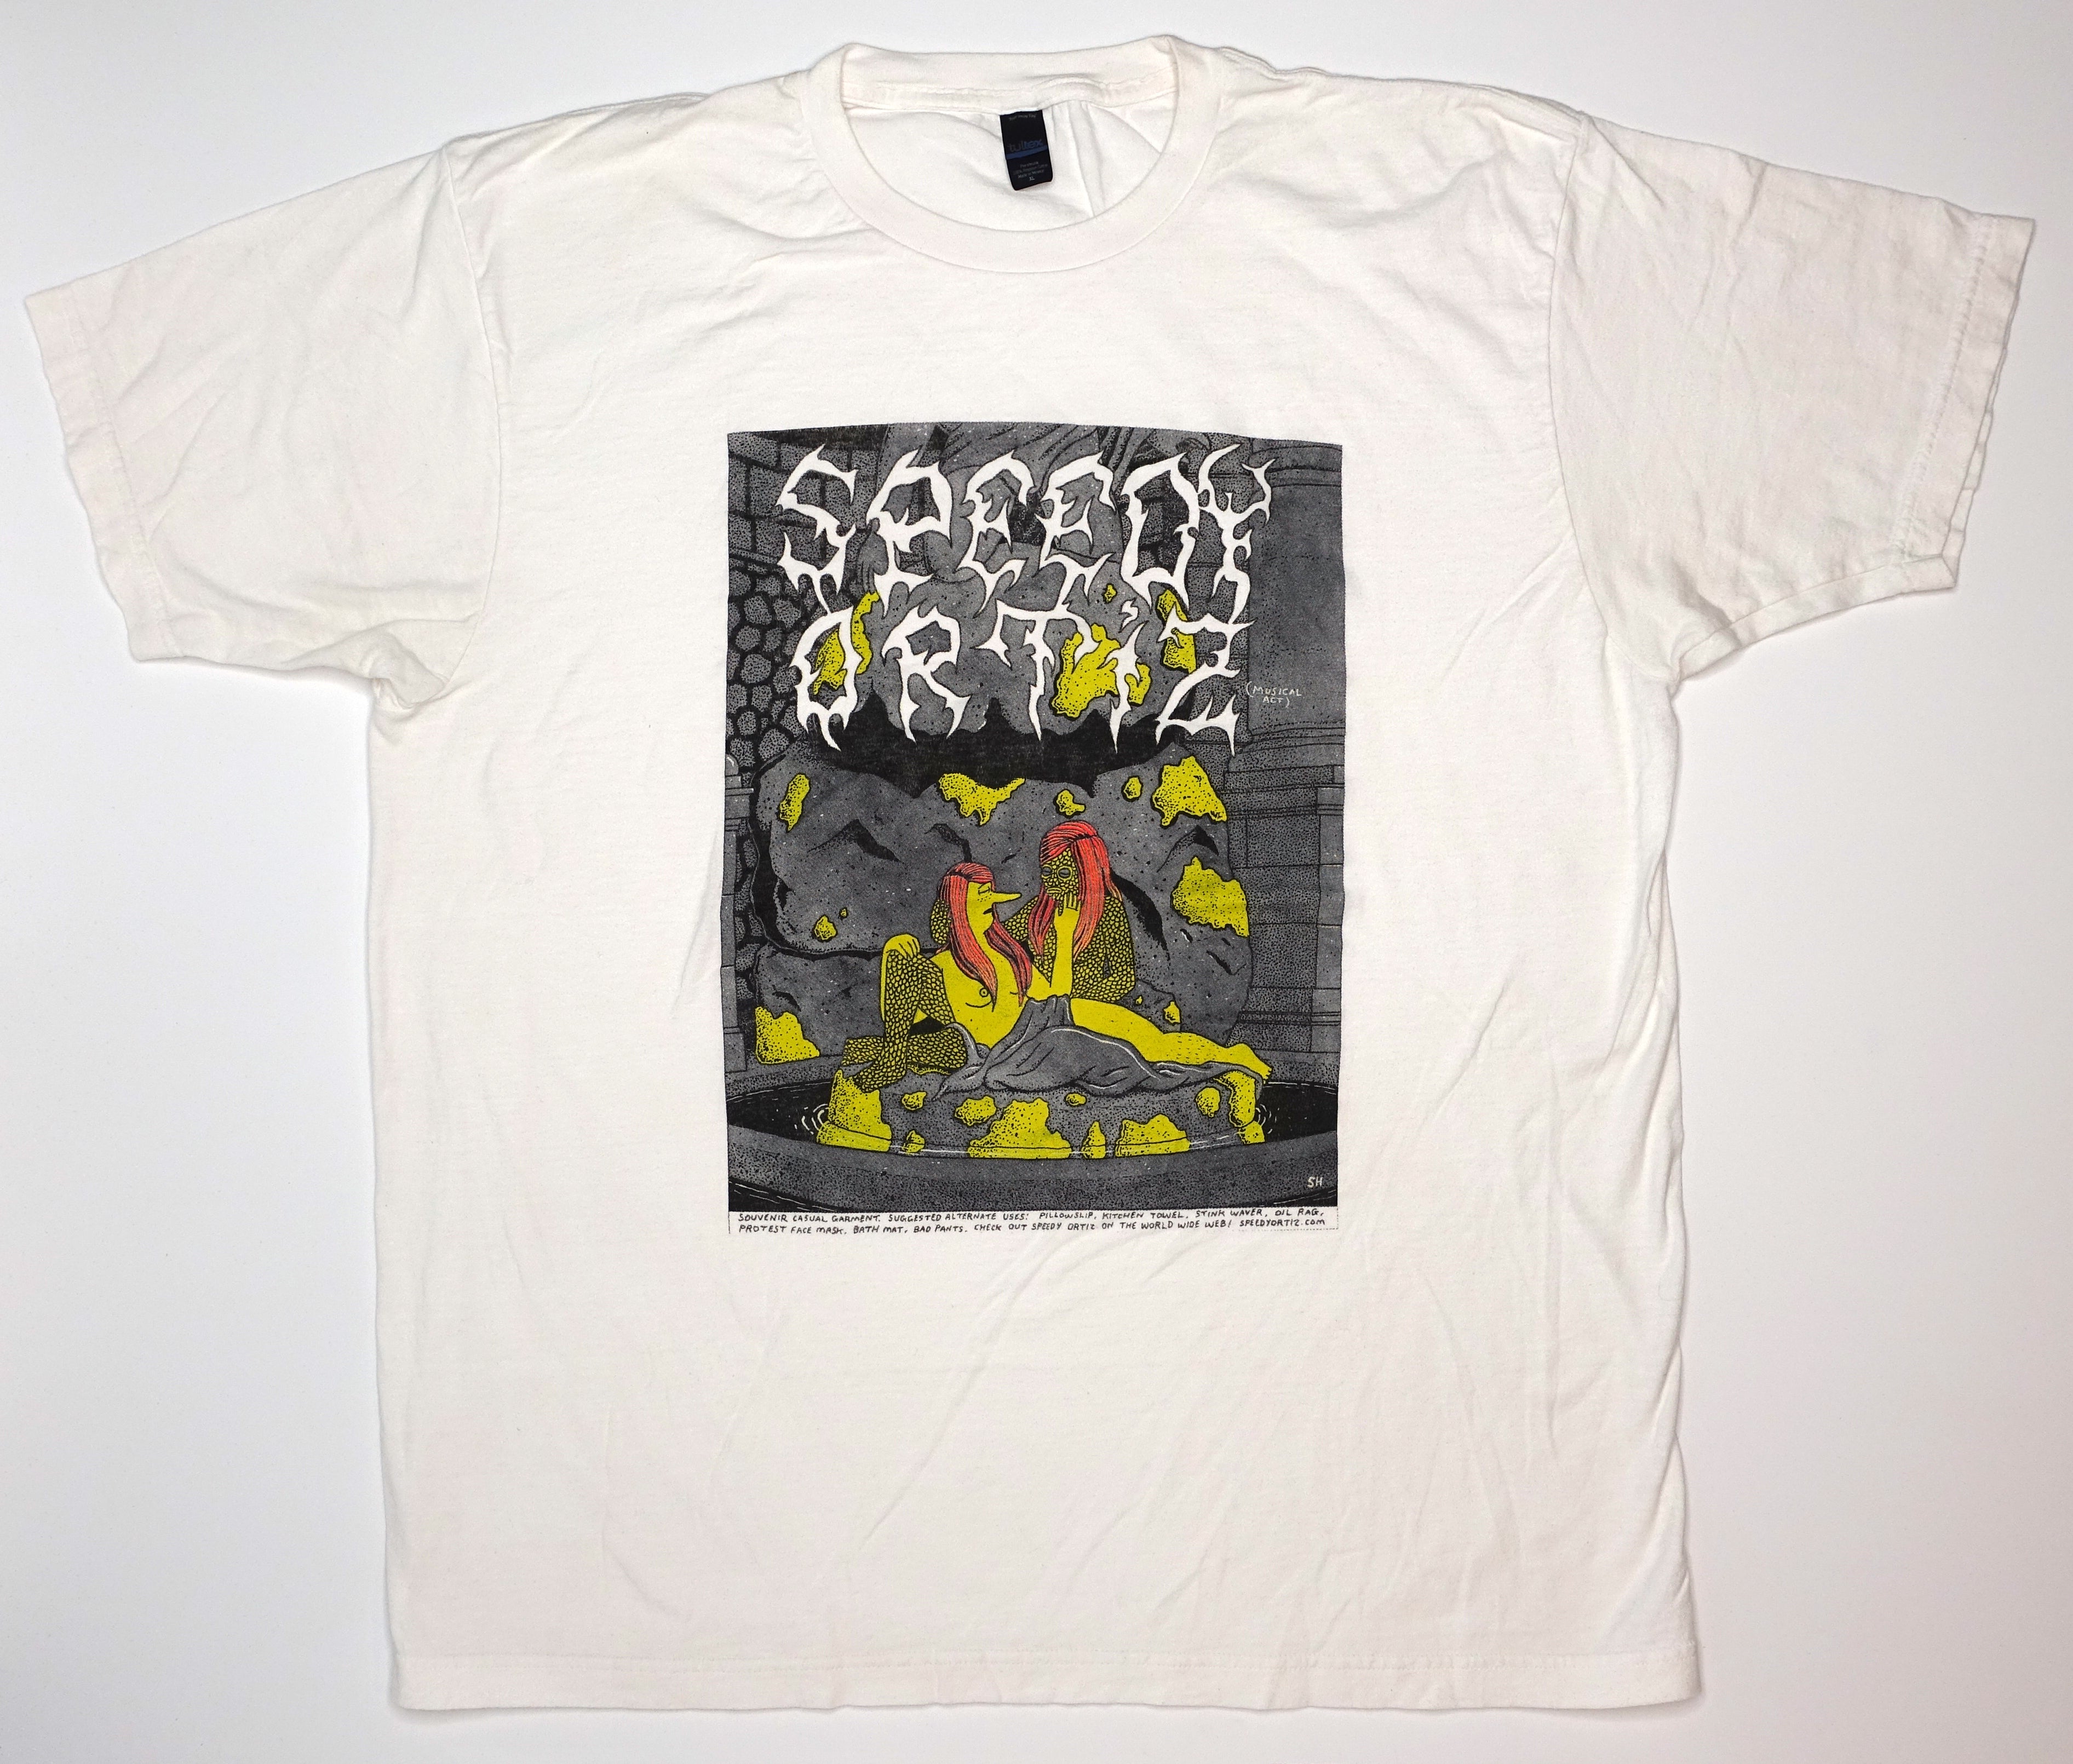 Speedy Ortiz - Souvenir Casual Garment 2015? Tour Shirt Size Large